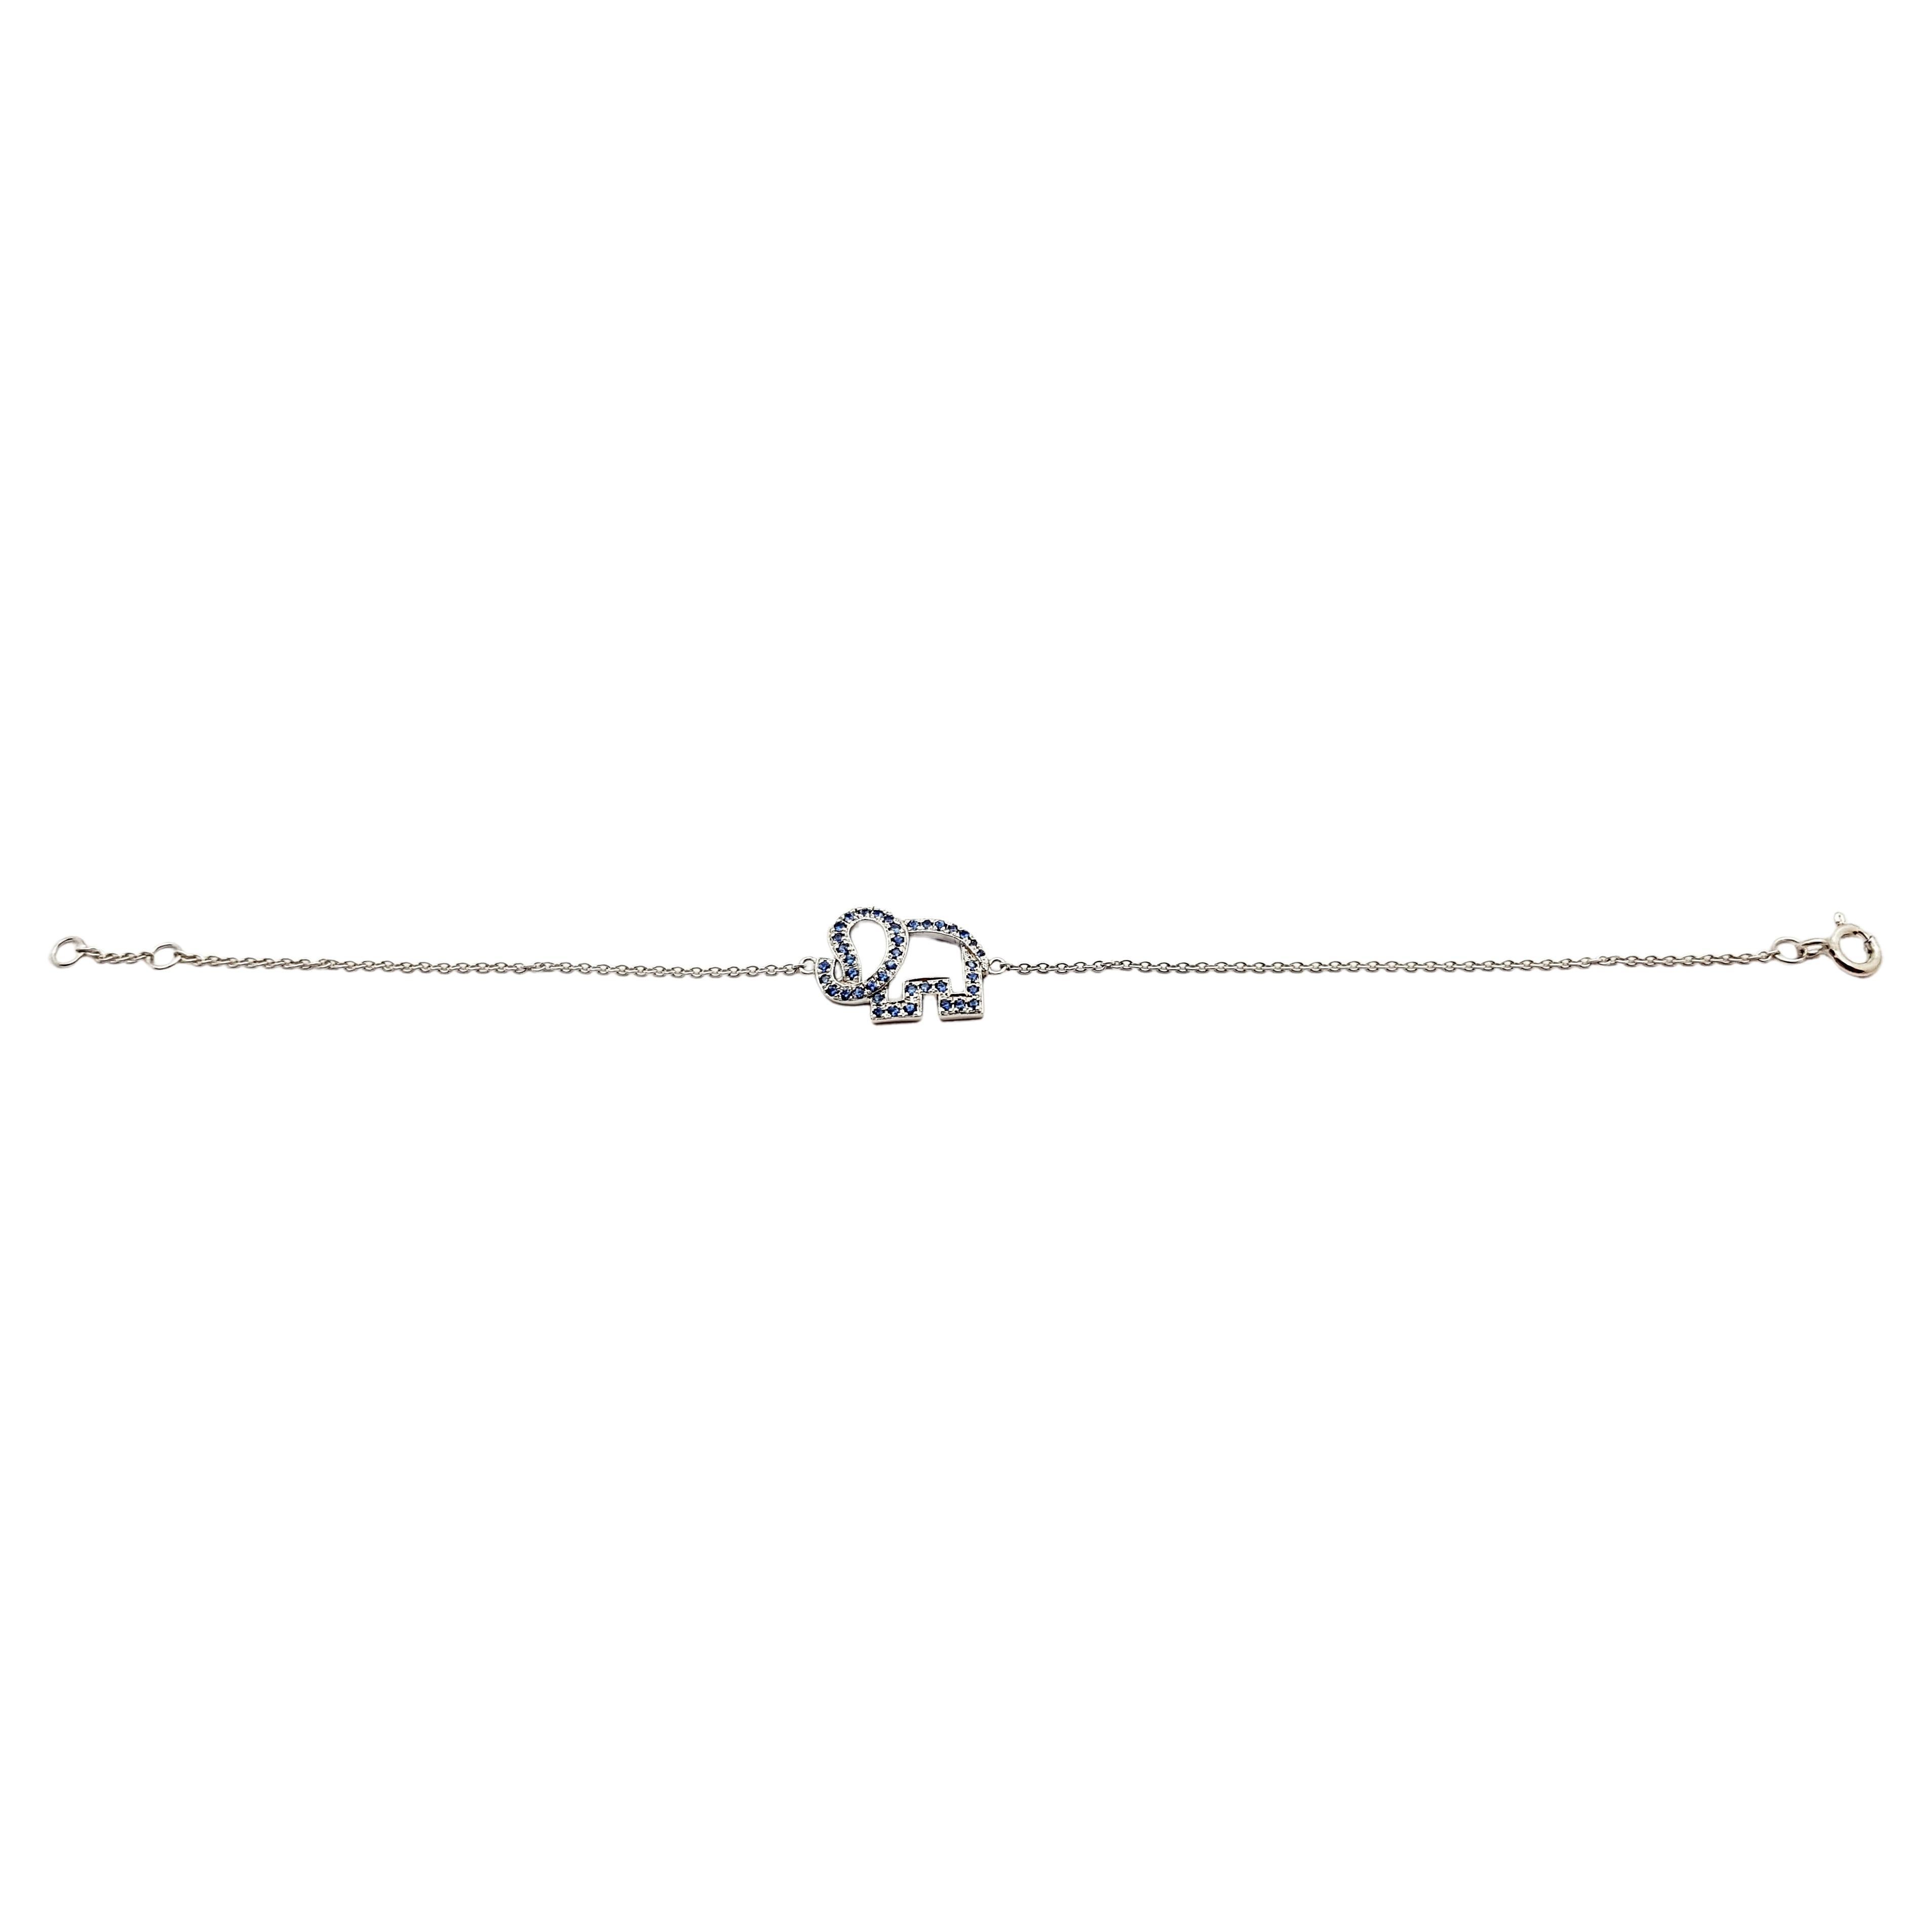 What does an elephant bracelet symbolize?